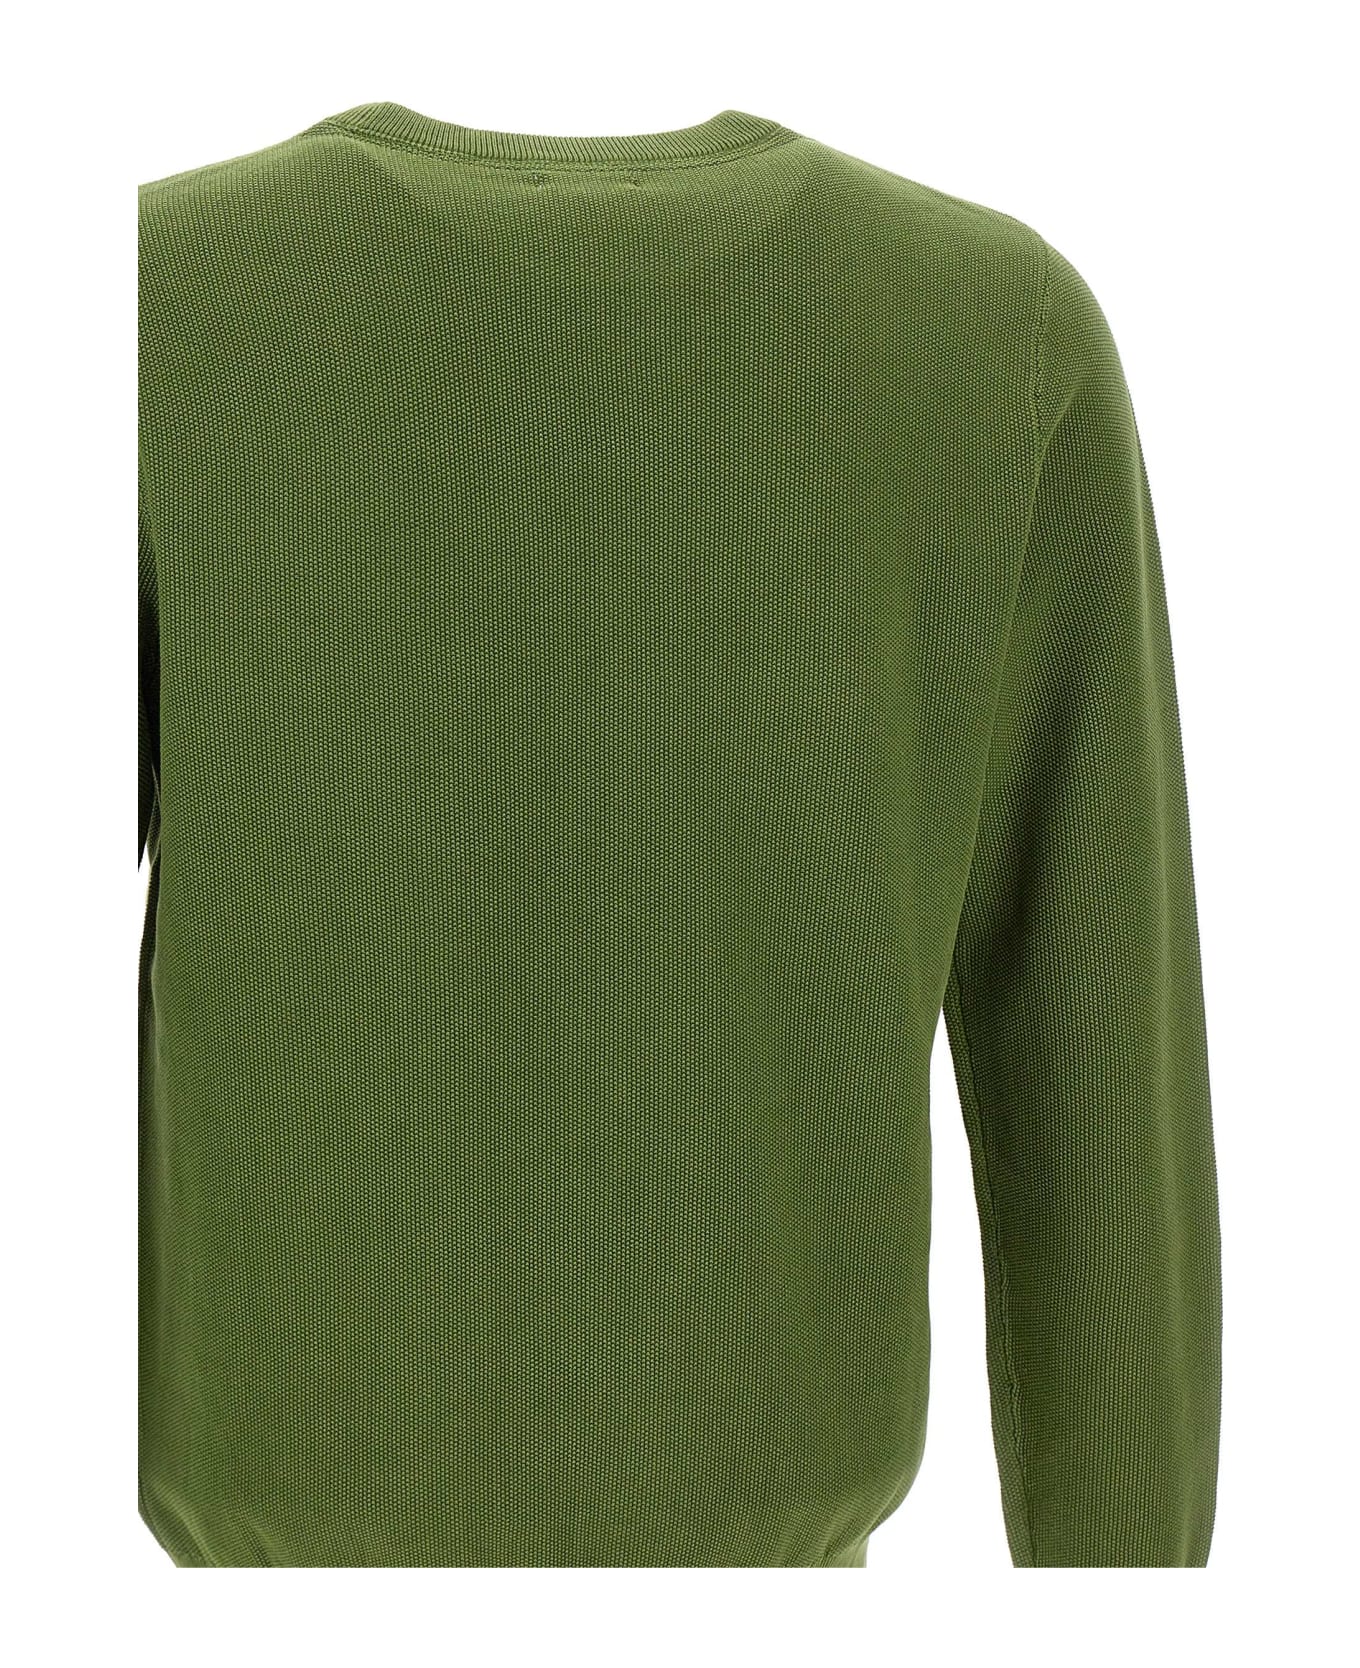 Sun 68 'round Vintage' Sweater Cotton Sweater - VERDE SCURO